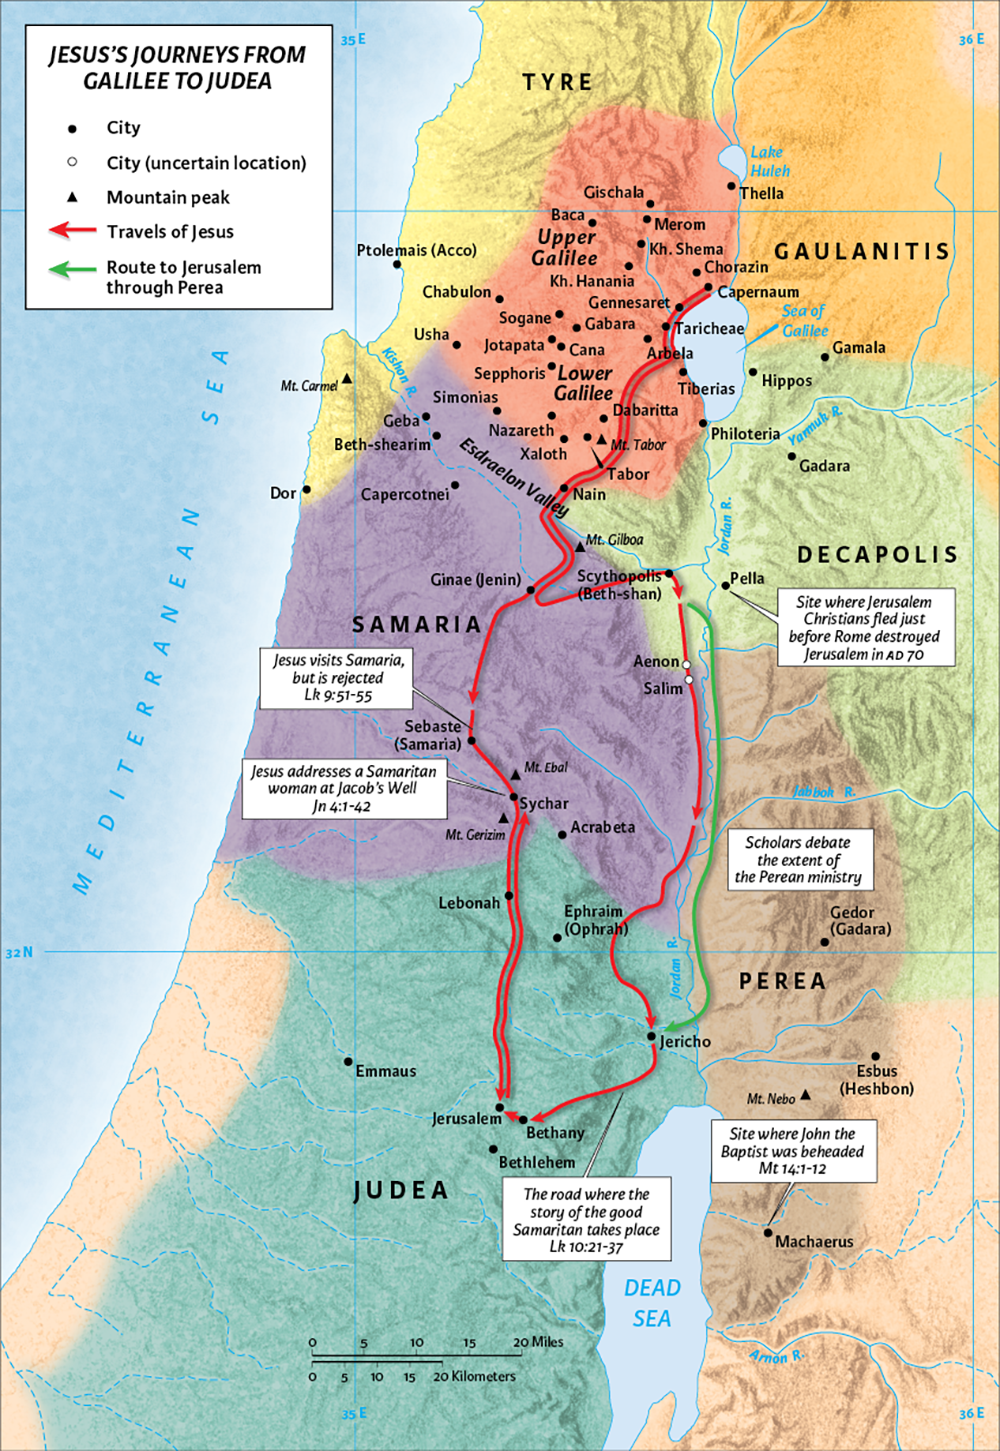 Jesus’s Journeys from Galilee to Judea